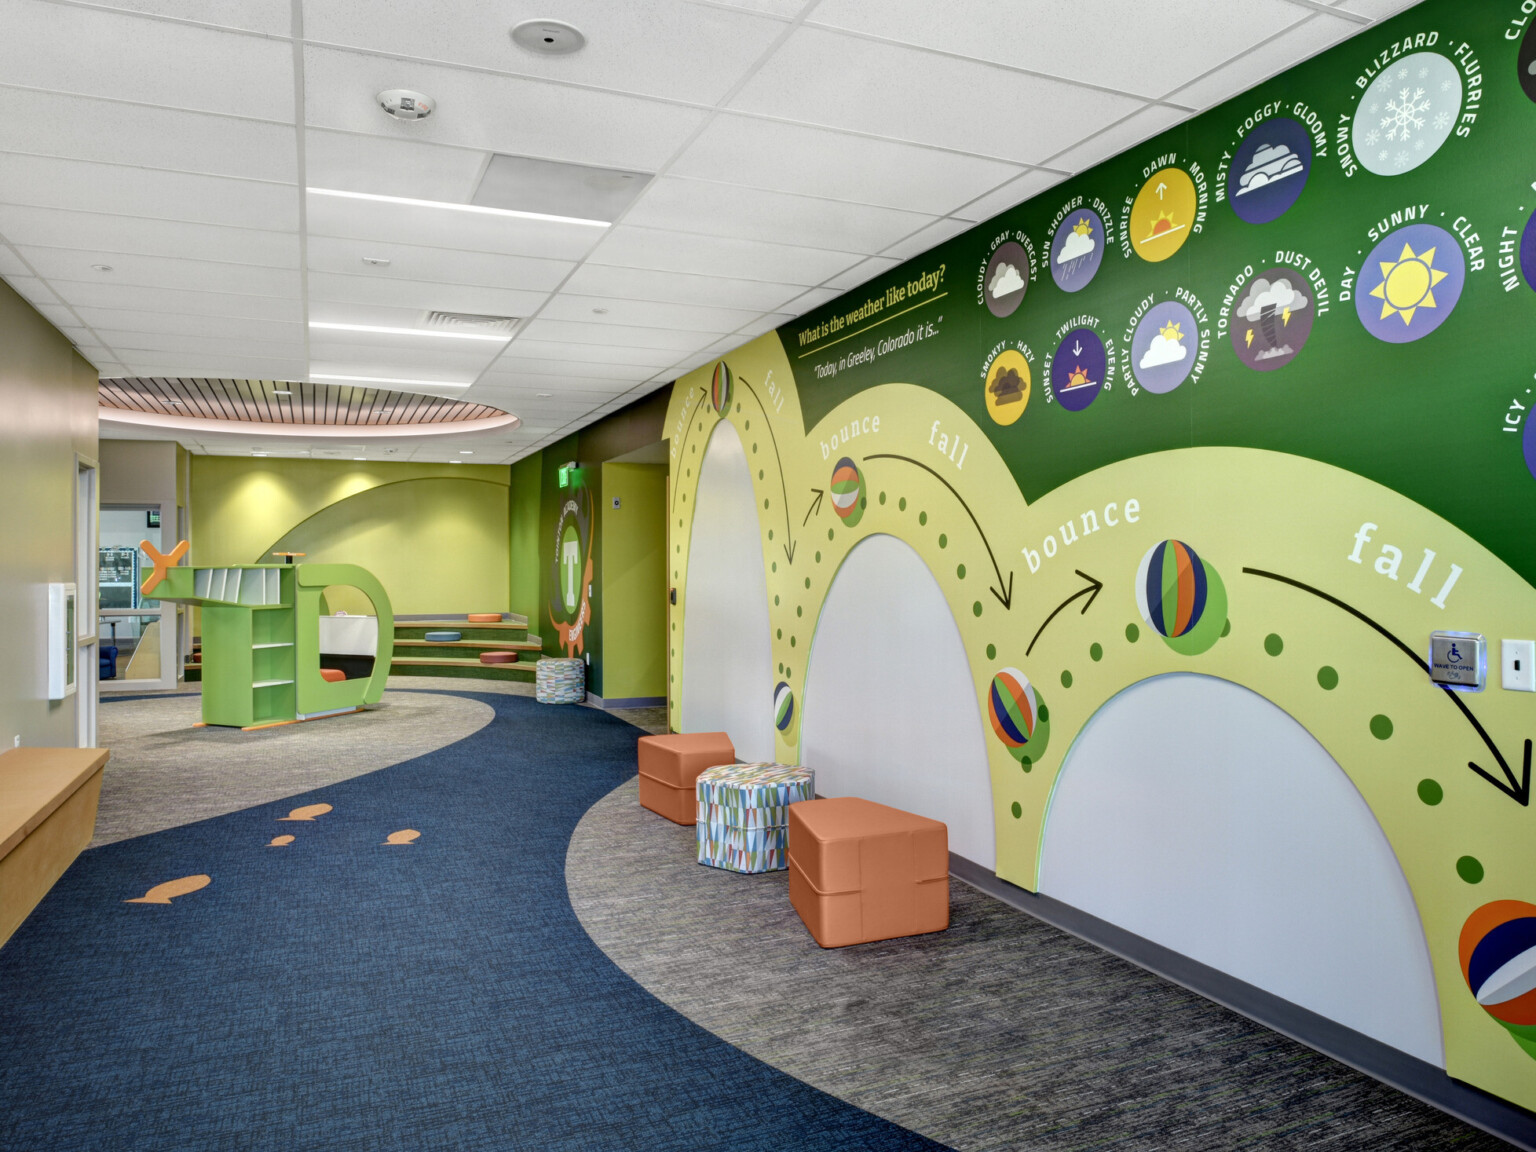 green and yellow walls create visual interest, modular seating area, blue/grey carpet, fluorescent lighting